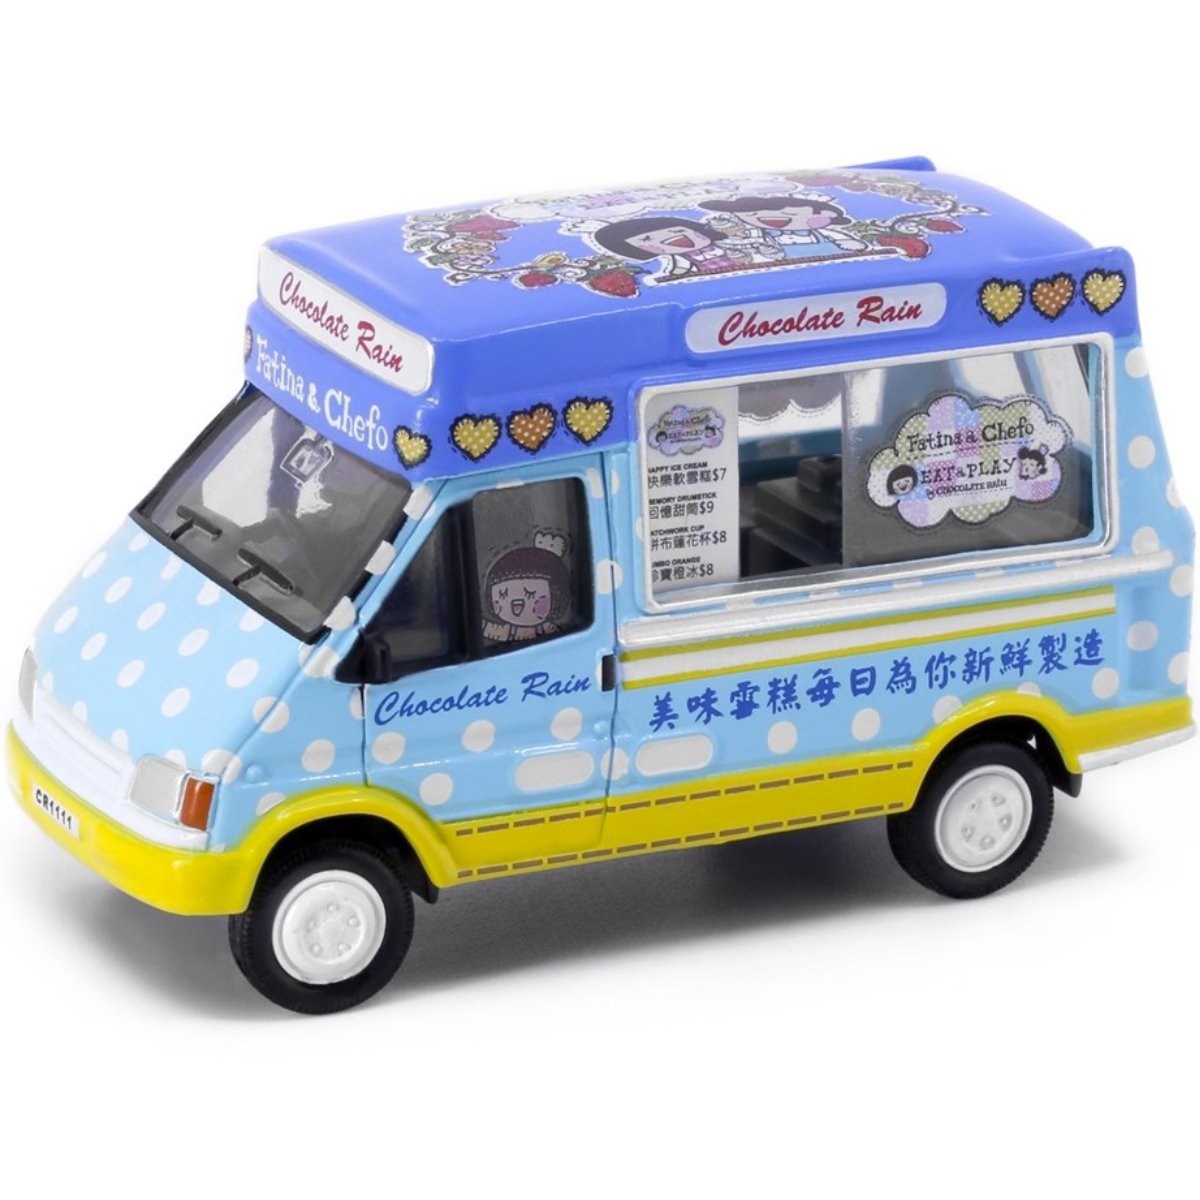 Tiny Models Chocolate Rain Ice Cream Van (1:72 Scale) - Phillips Hobbies